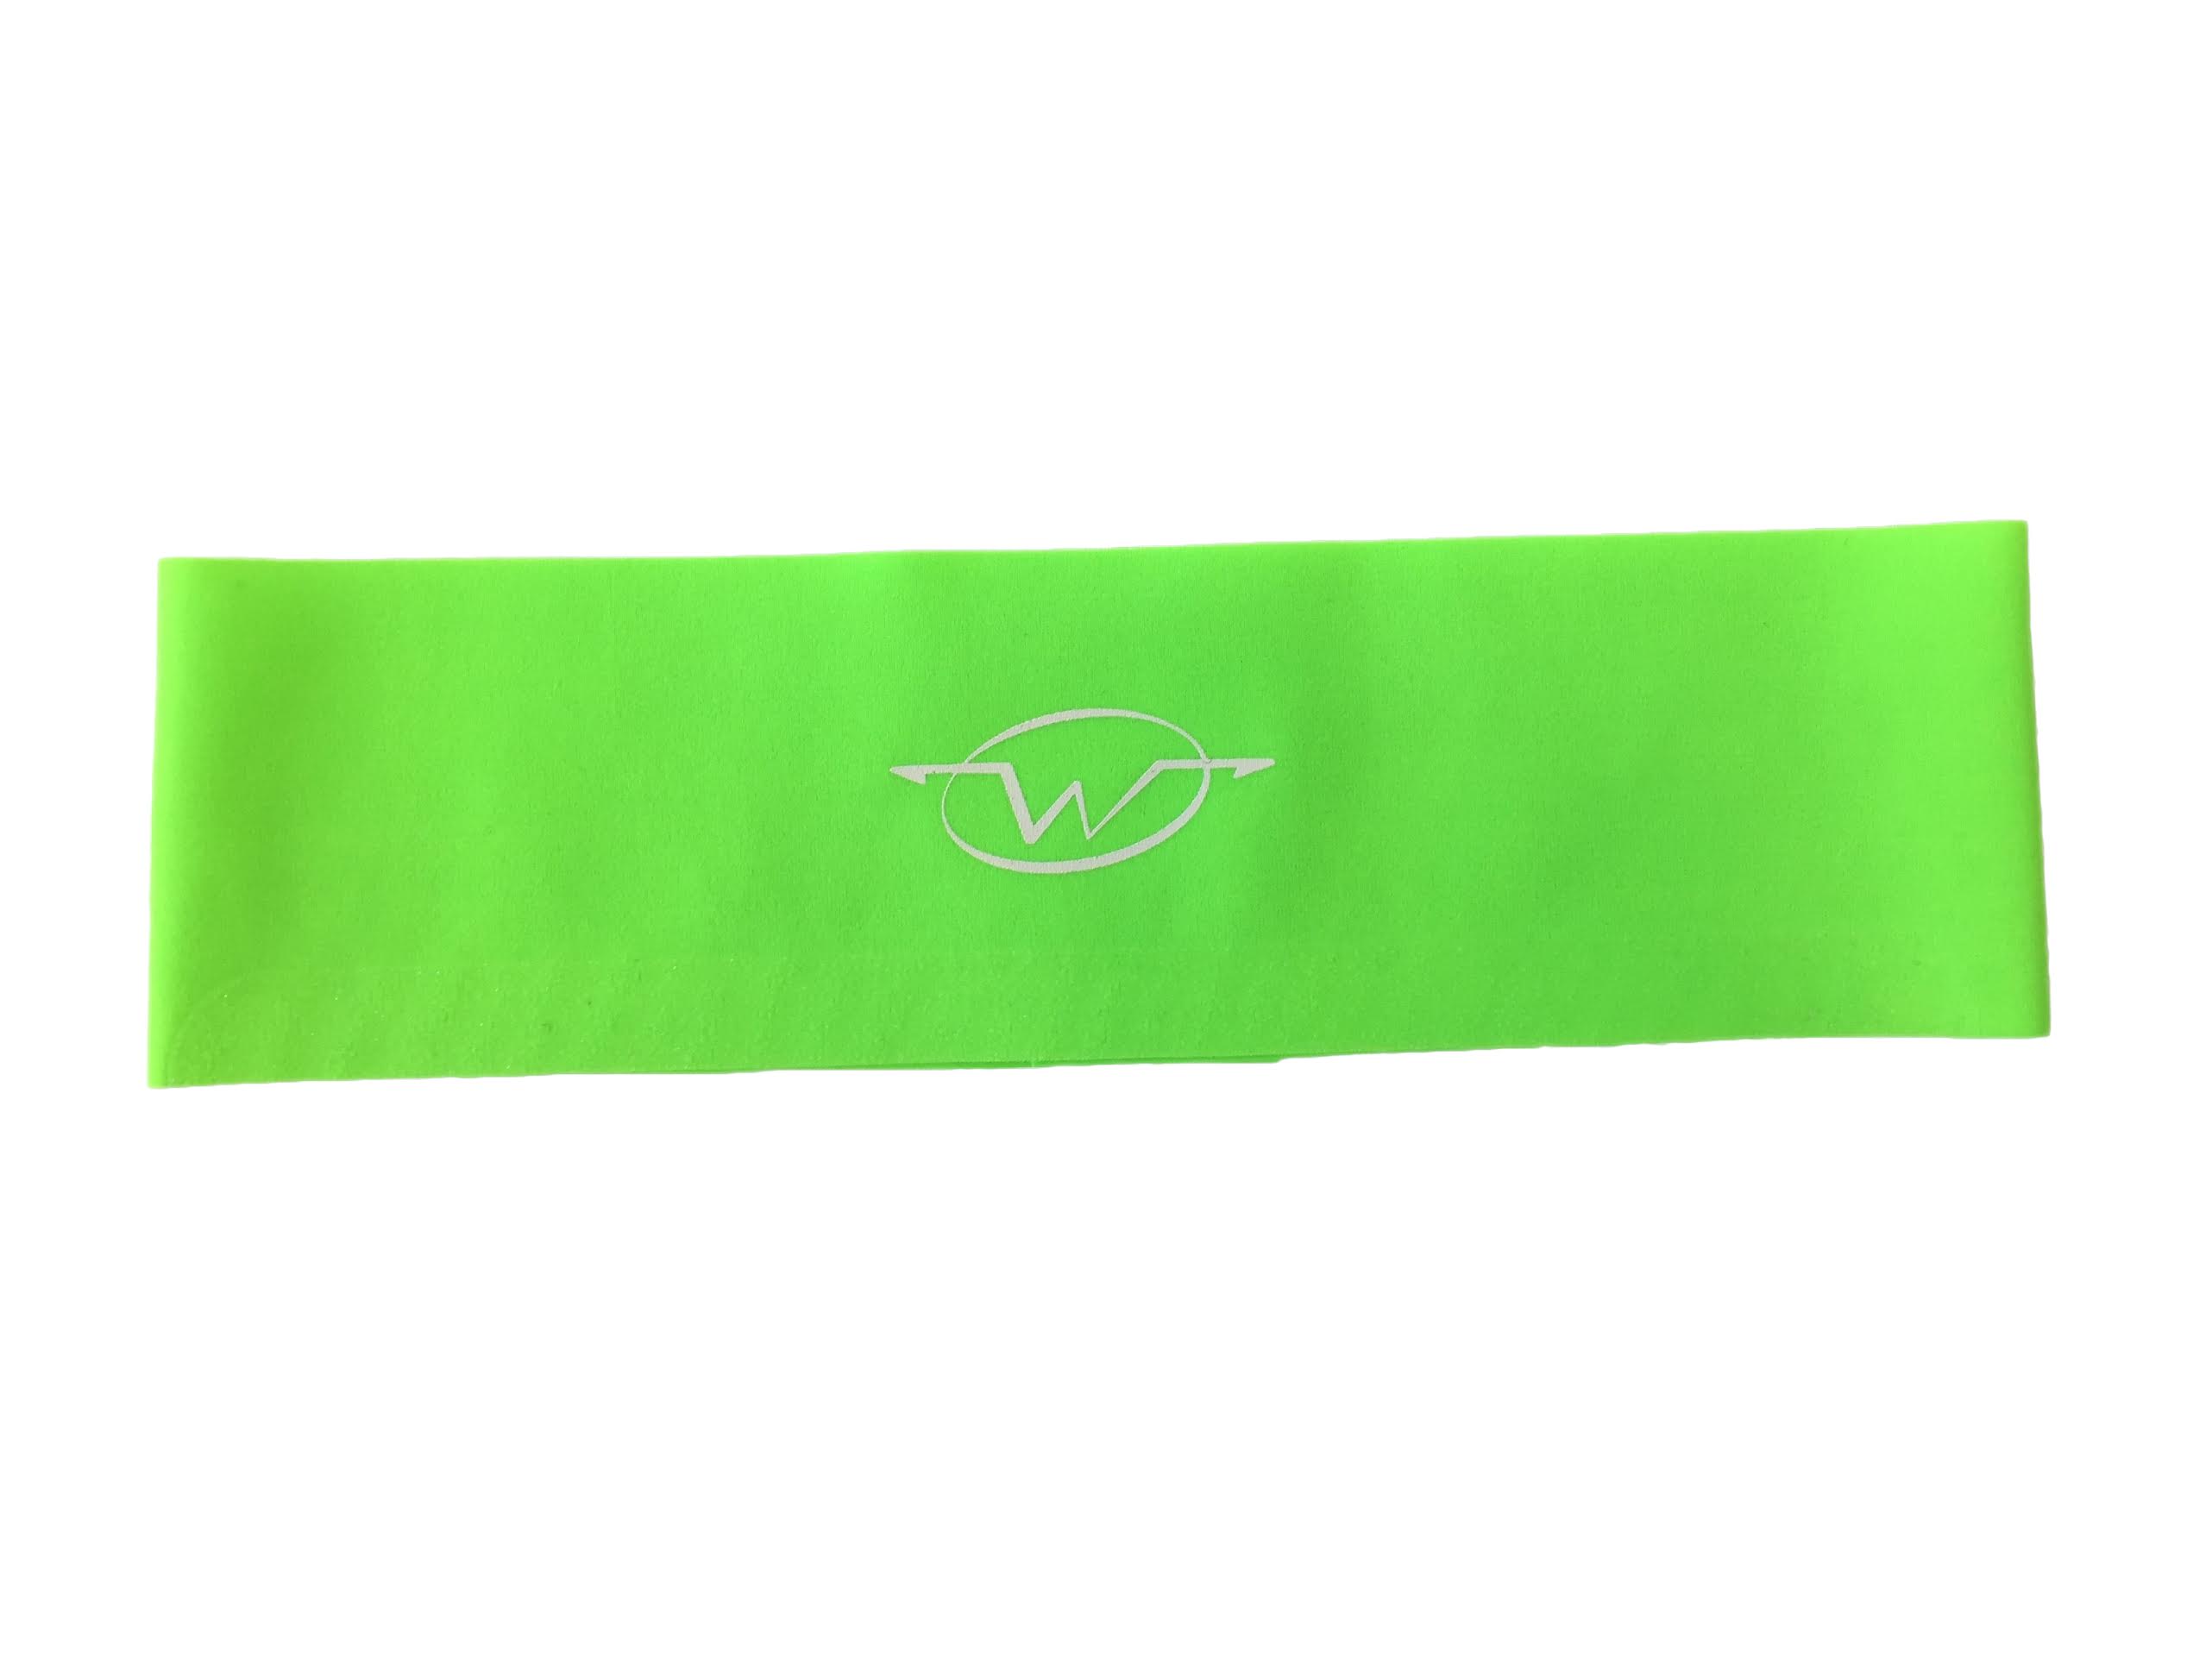 Green performance headband by Wickflow.